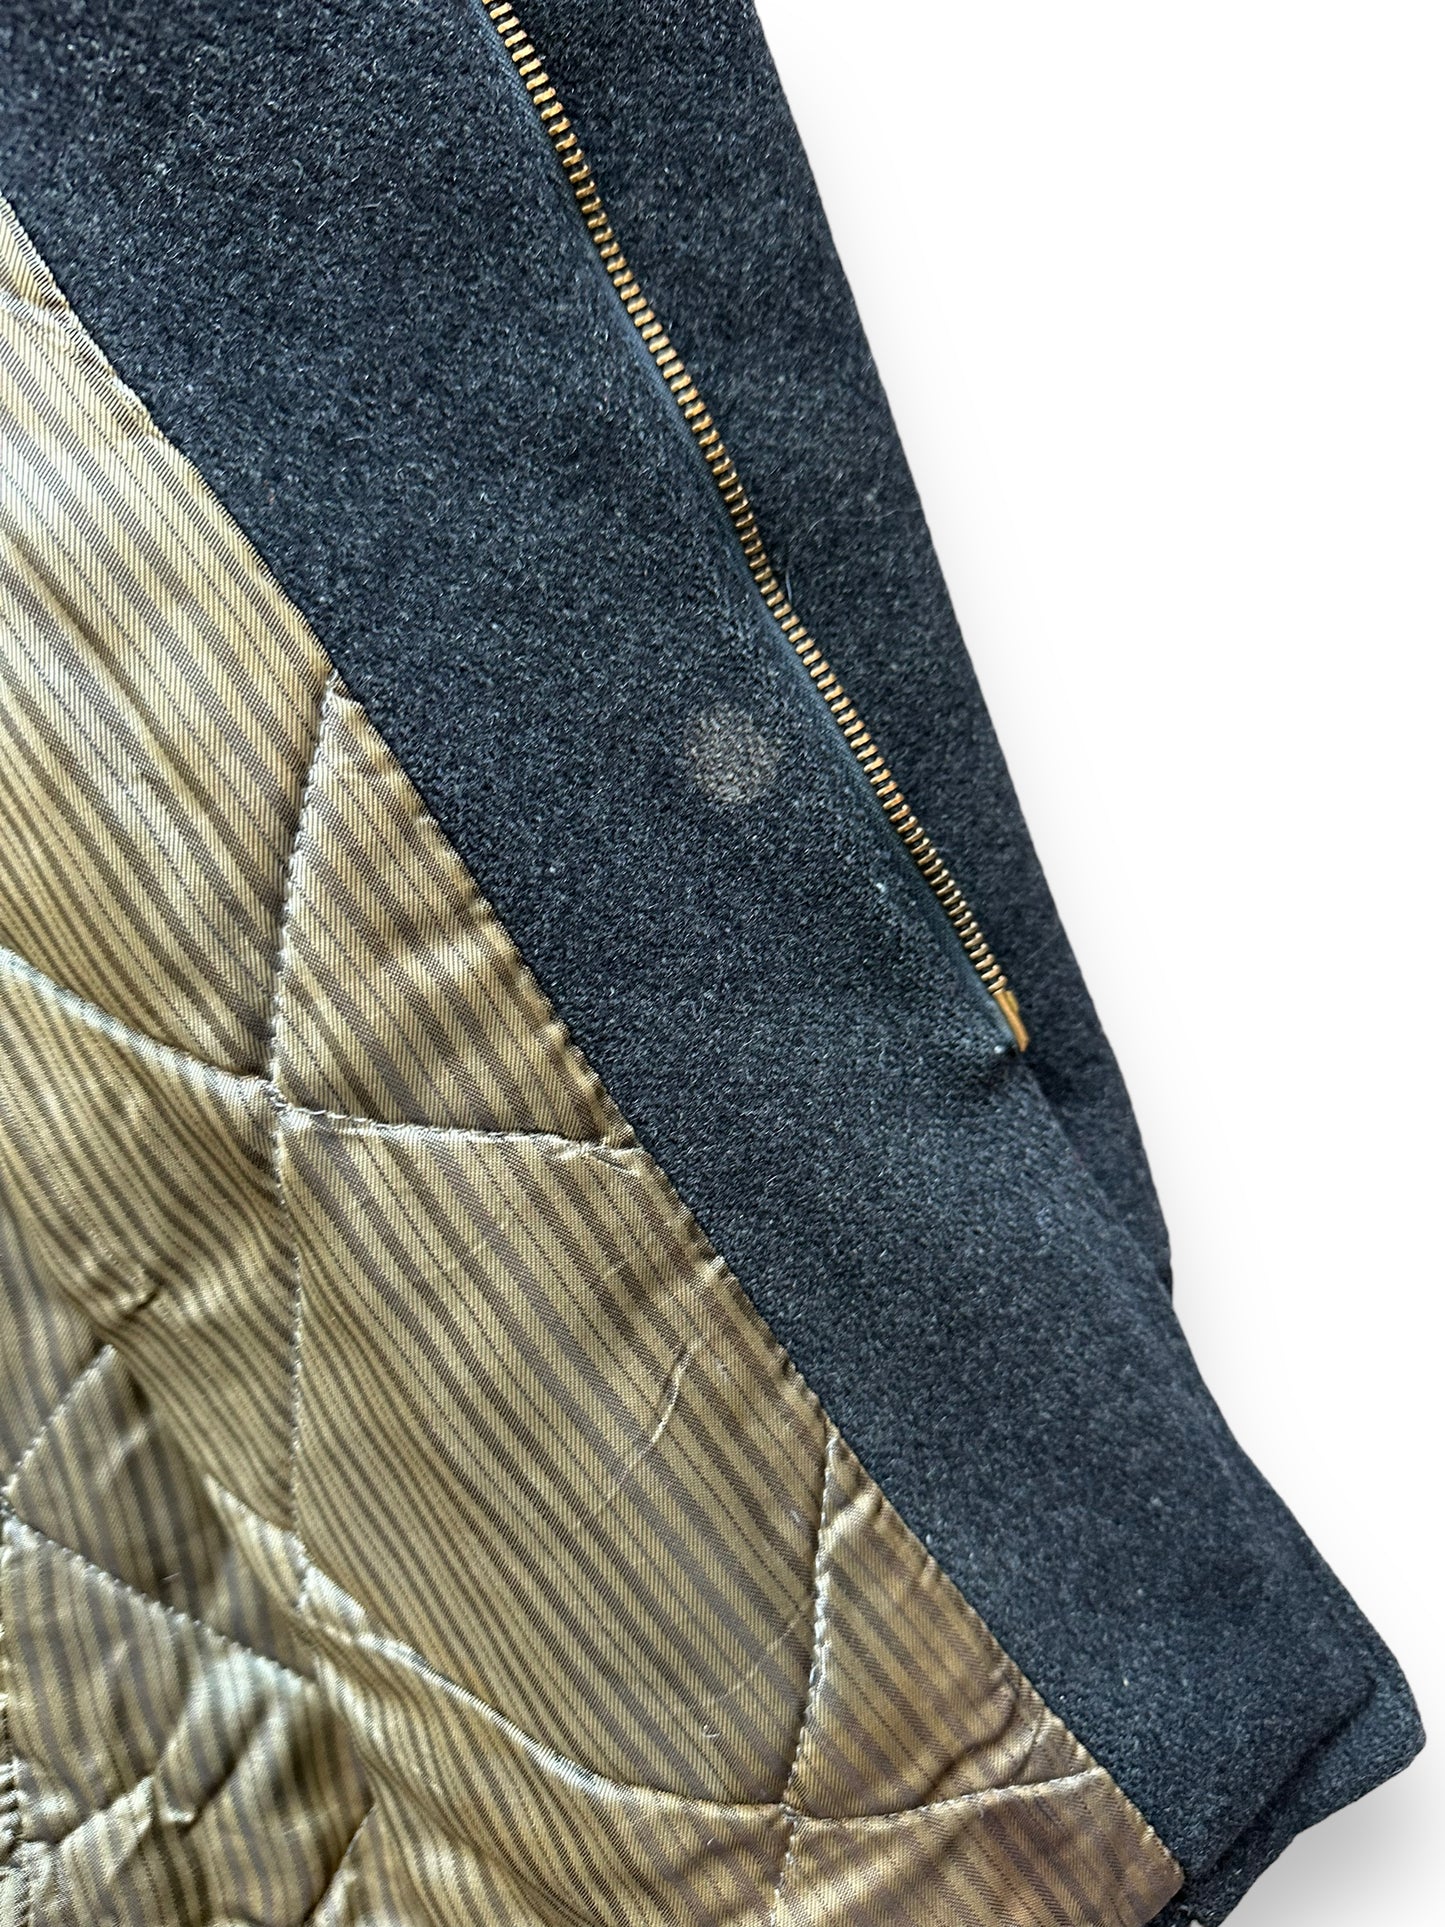 Spot on Lining of Vintage Buck Skein Clicker Jacket SZ 42 |  Barn Owl Vintage Goods | Vintage Clicker Coat Seattle